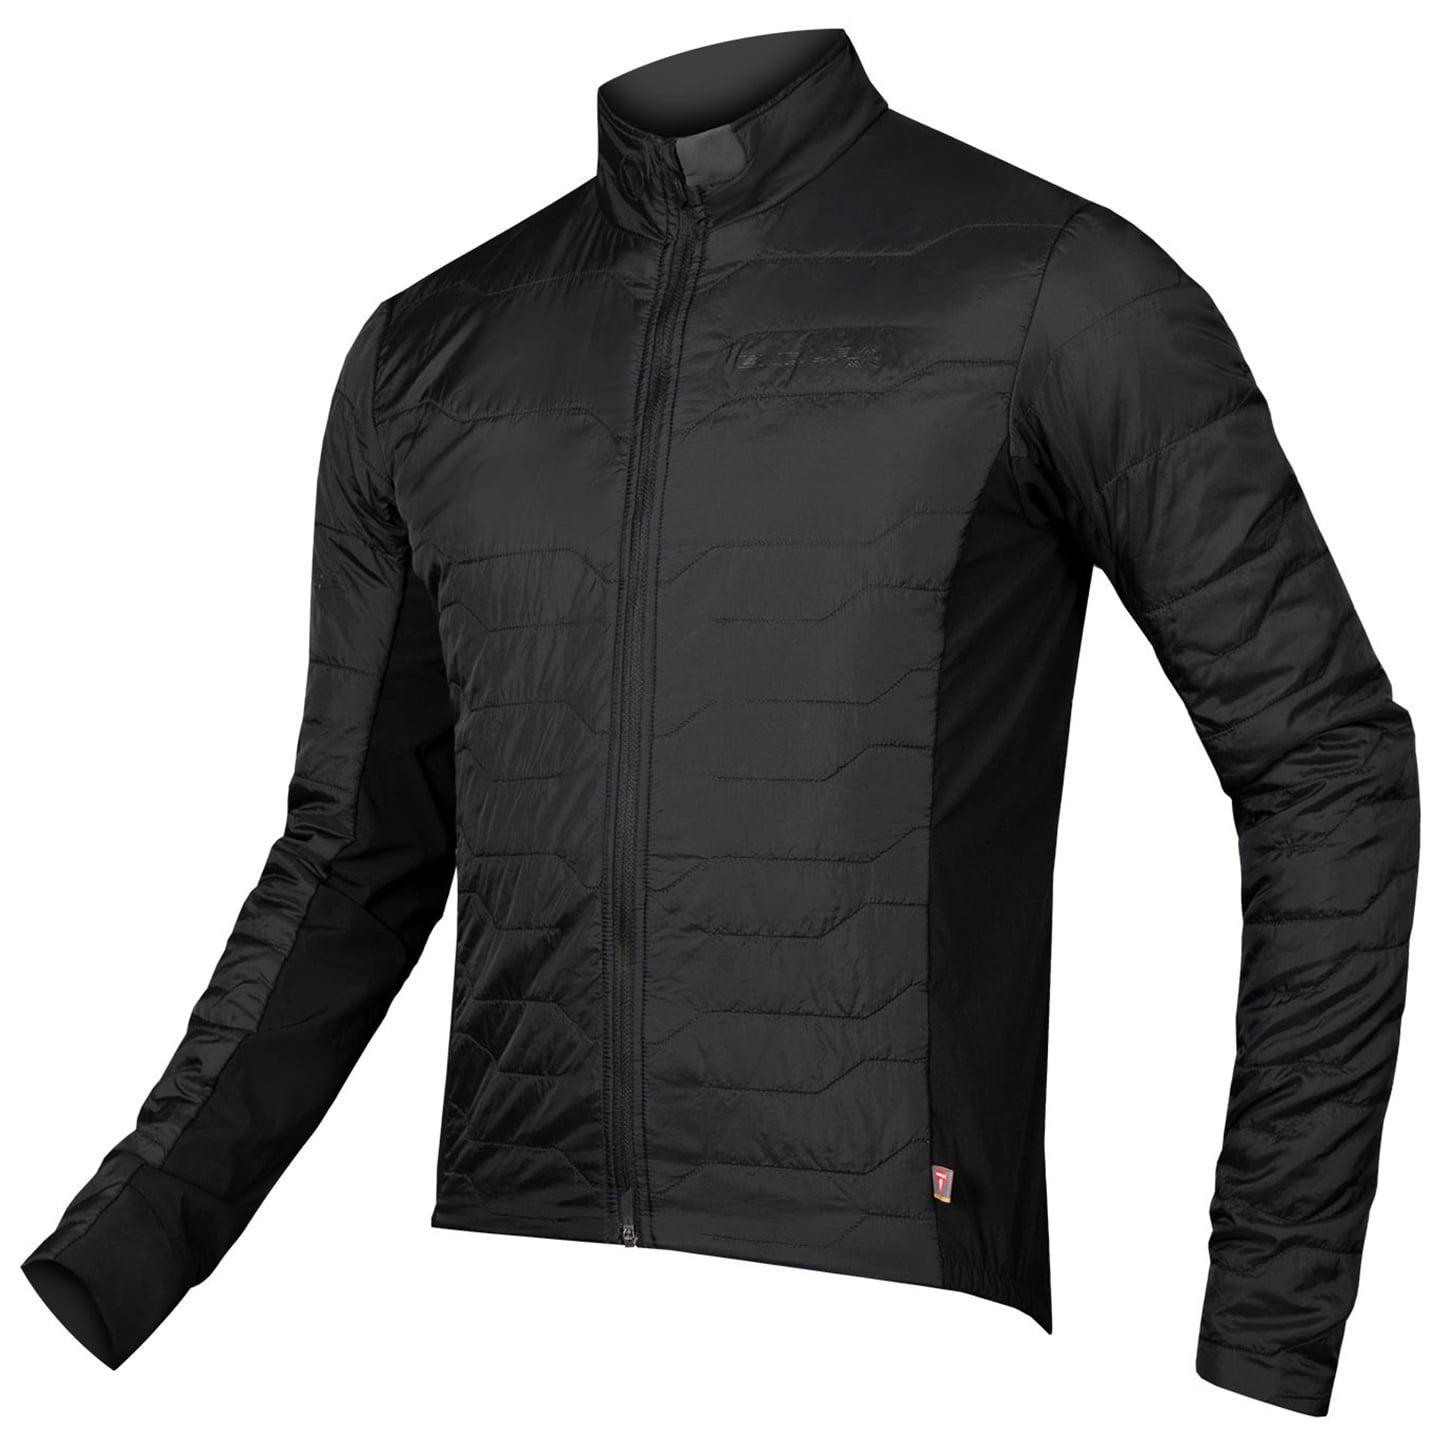 ENDURA Winter Jacket Pro SL Primaloft II Thermal Jacket, for men, size L, Winter jacket, Cycle clothing